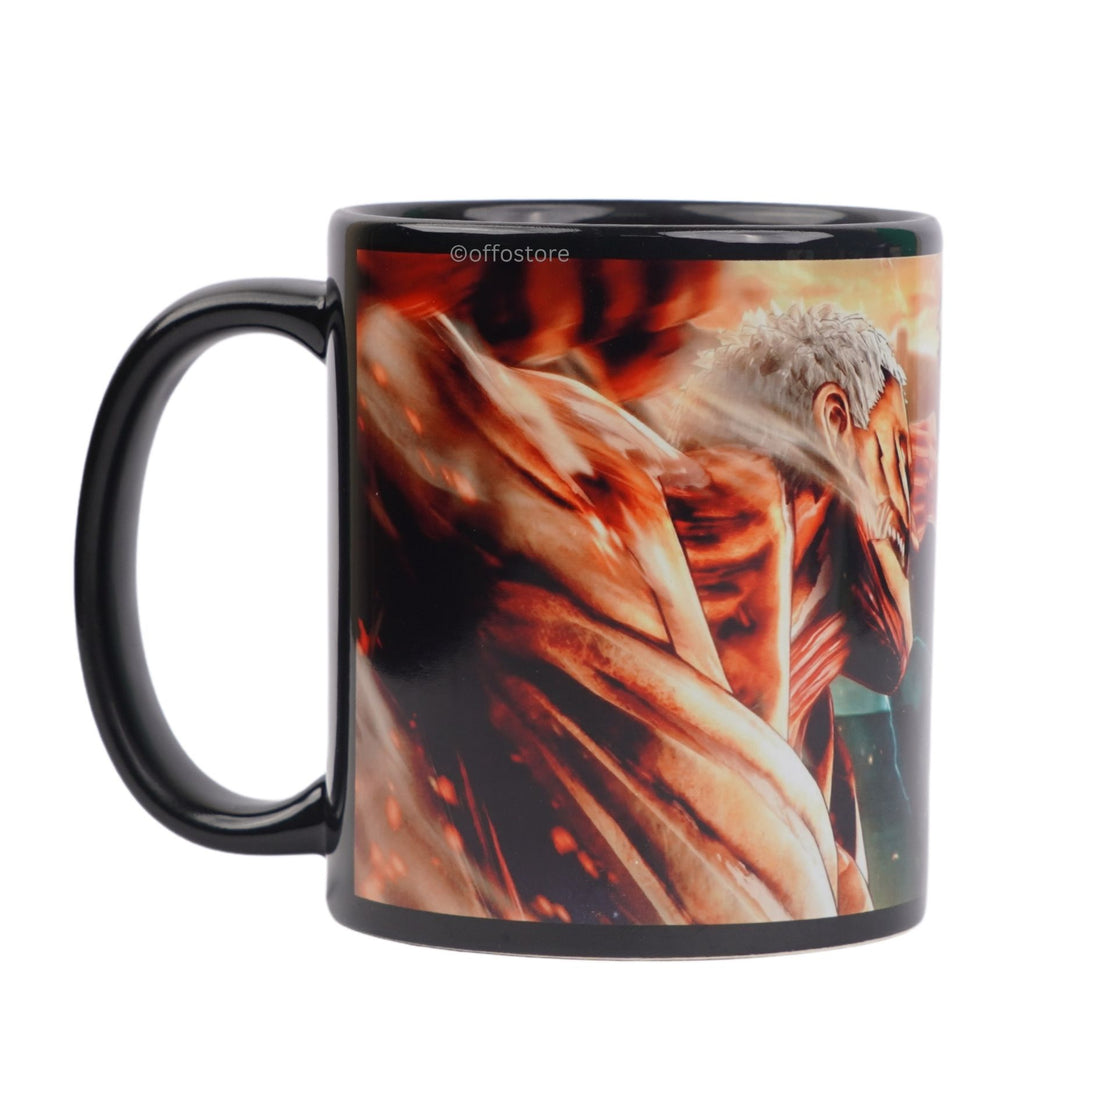 Attack on titan - Black Ceramic Mug